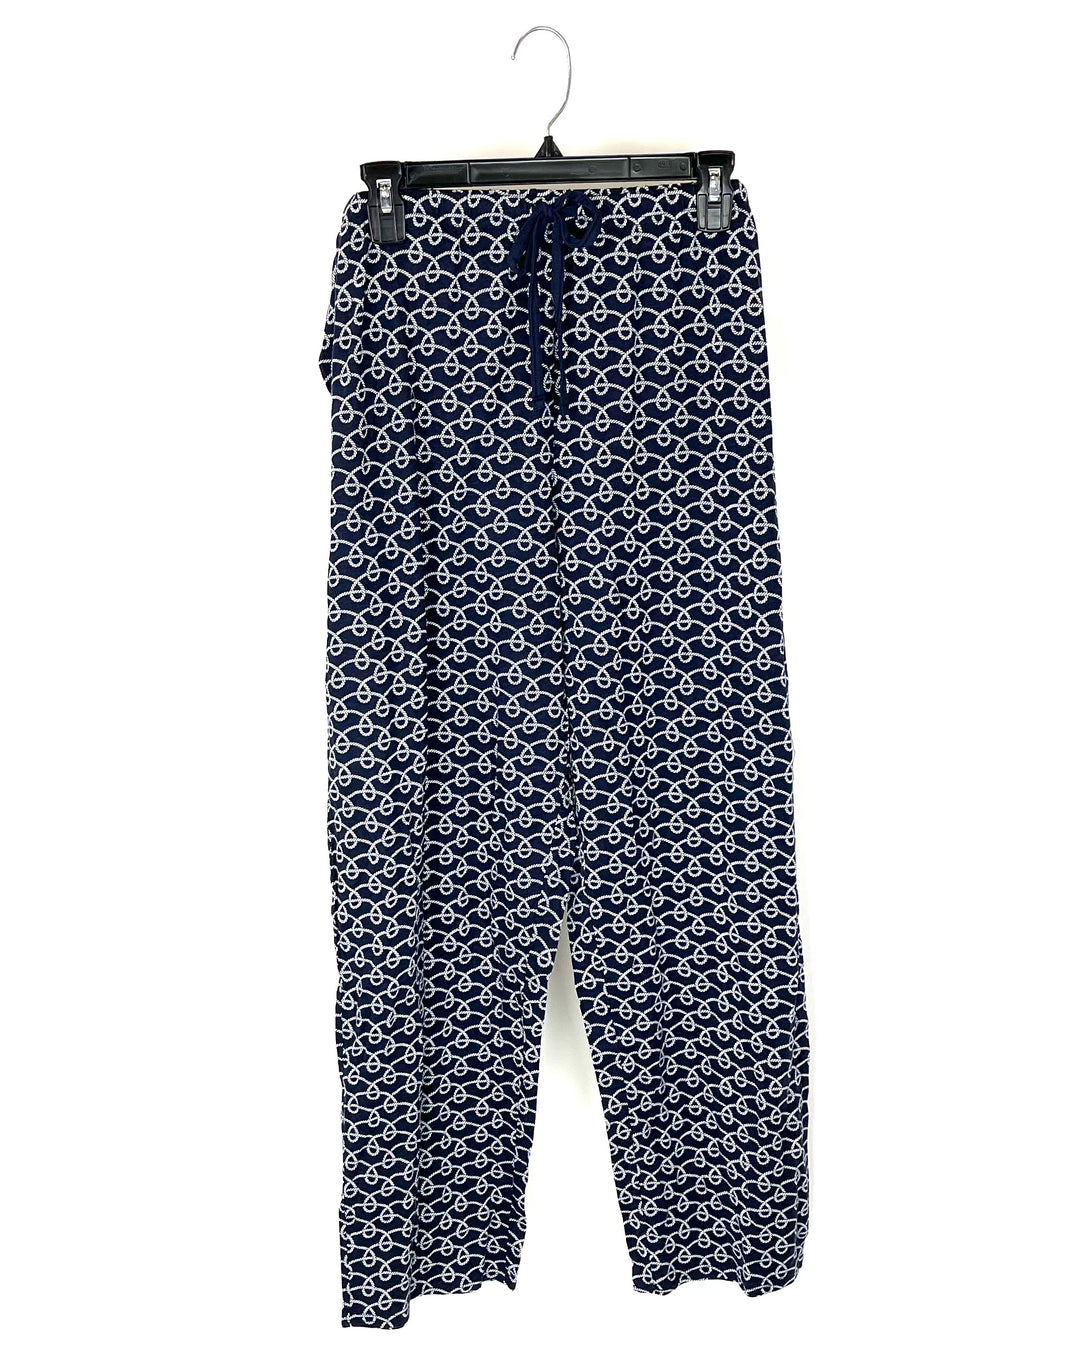 Navy Rope Print Pajama Pants - Small, 1X